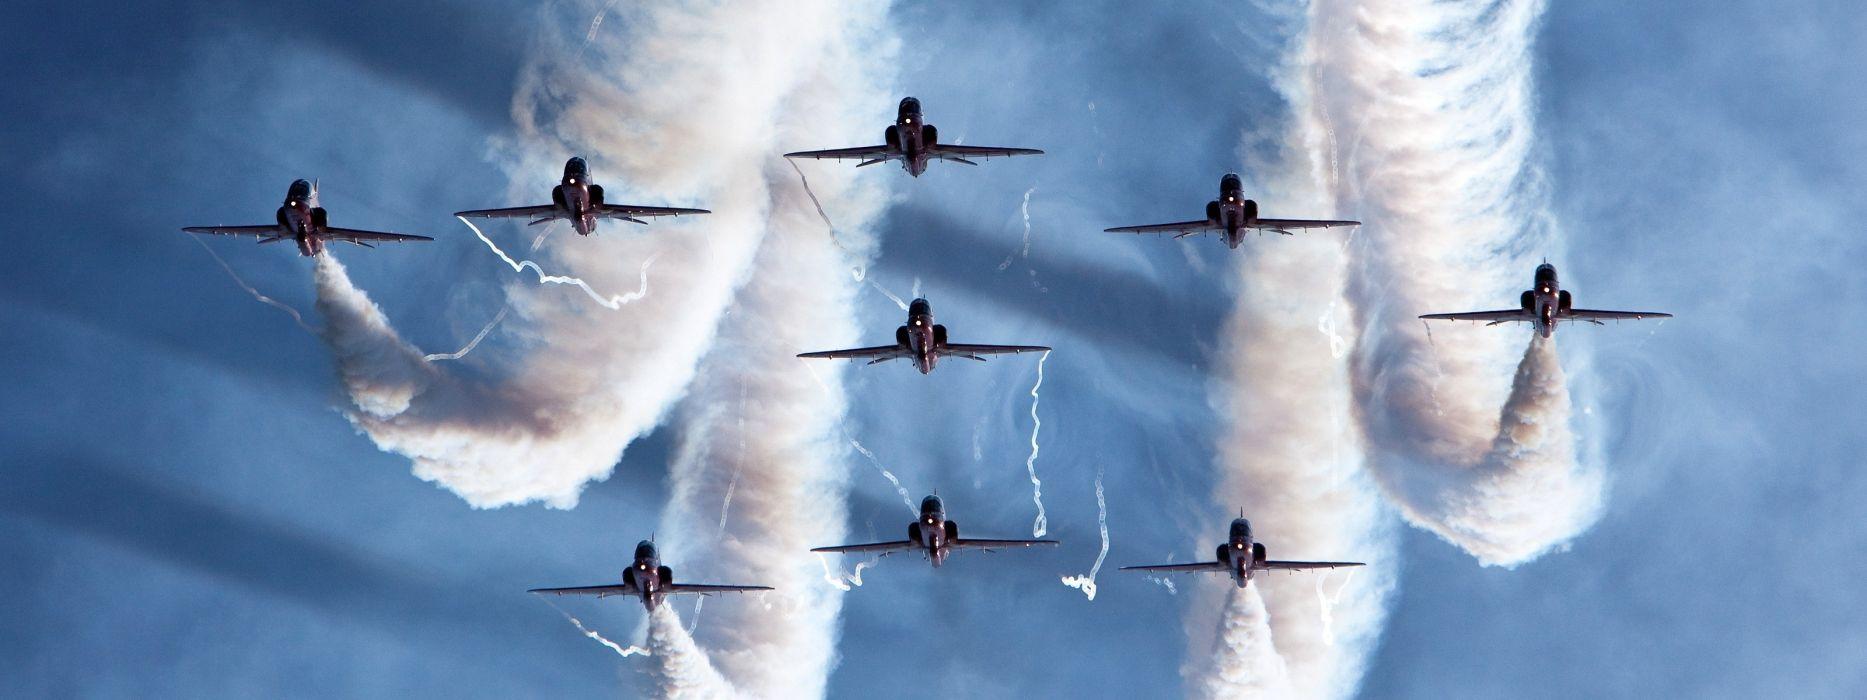 Aircraft airplanes aerobatics smoke jets military fighters wallpaper